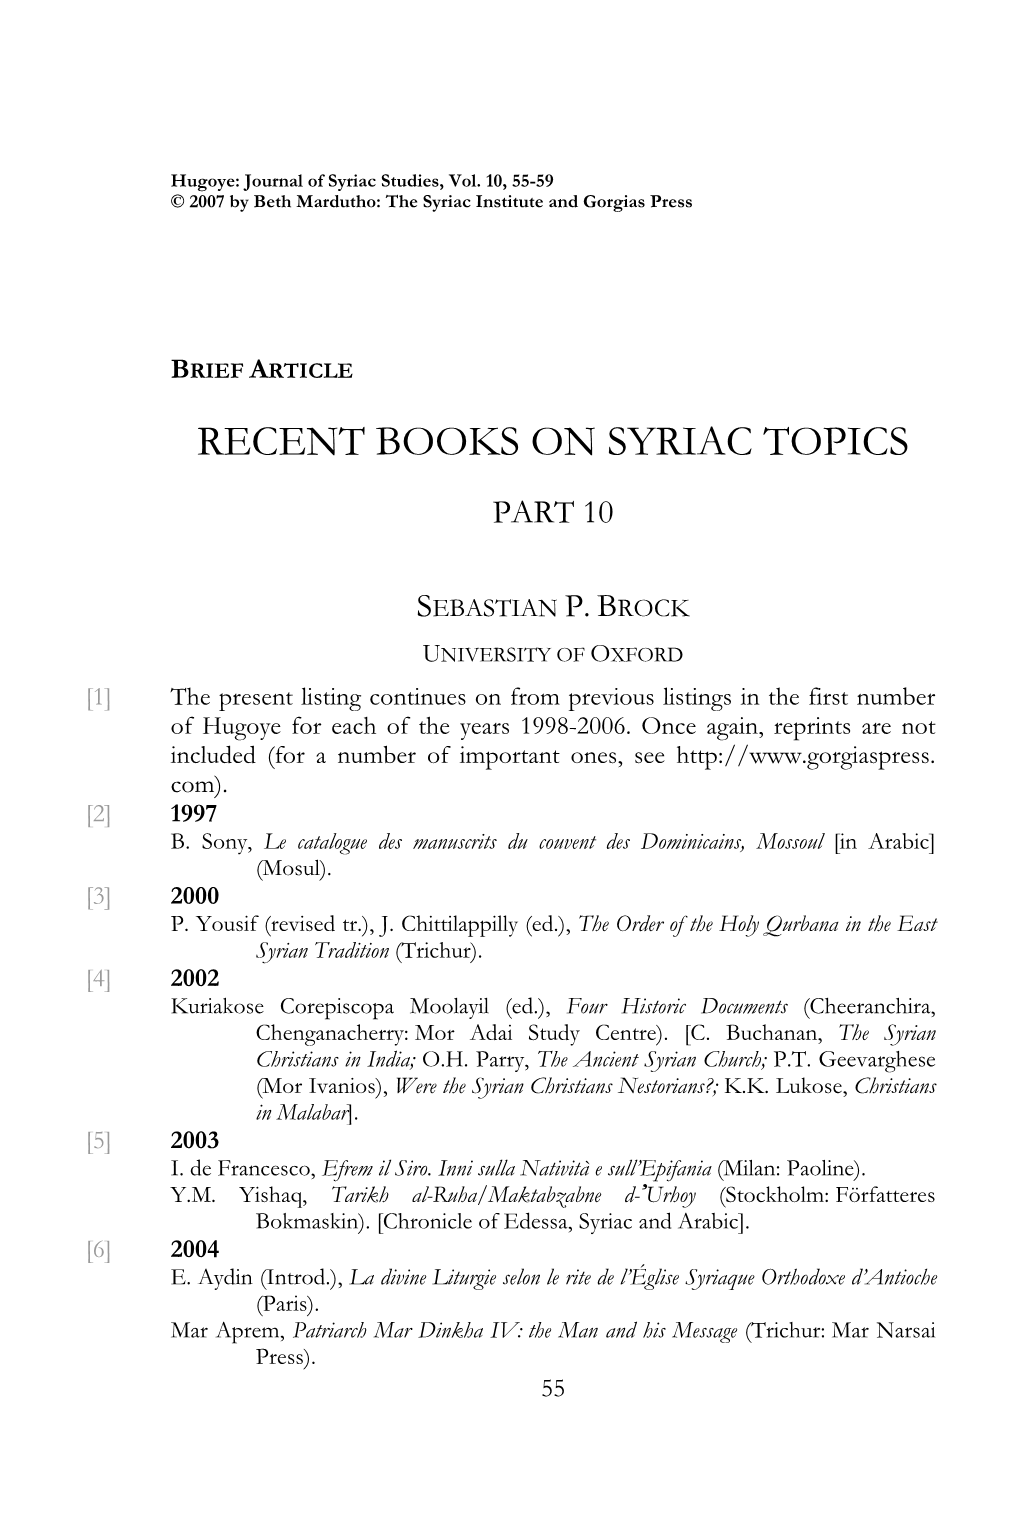 Recent Books on Syriac Topics Part 10